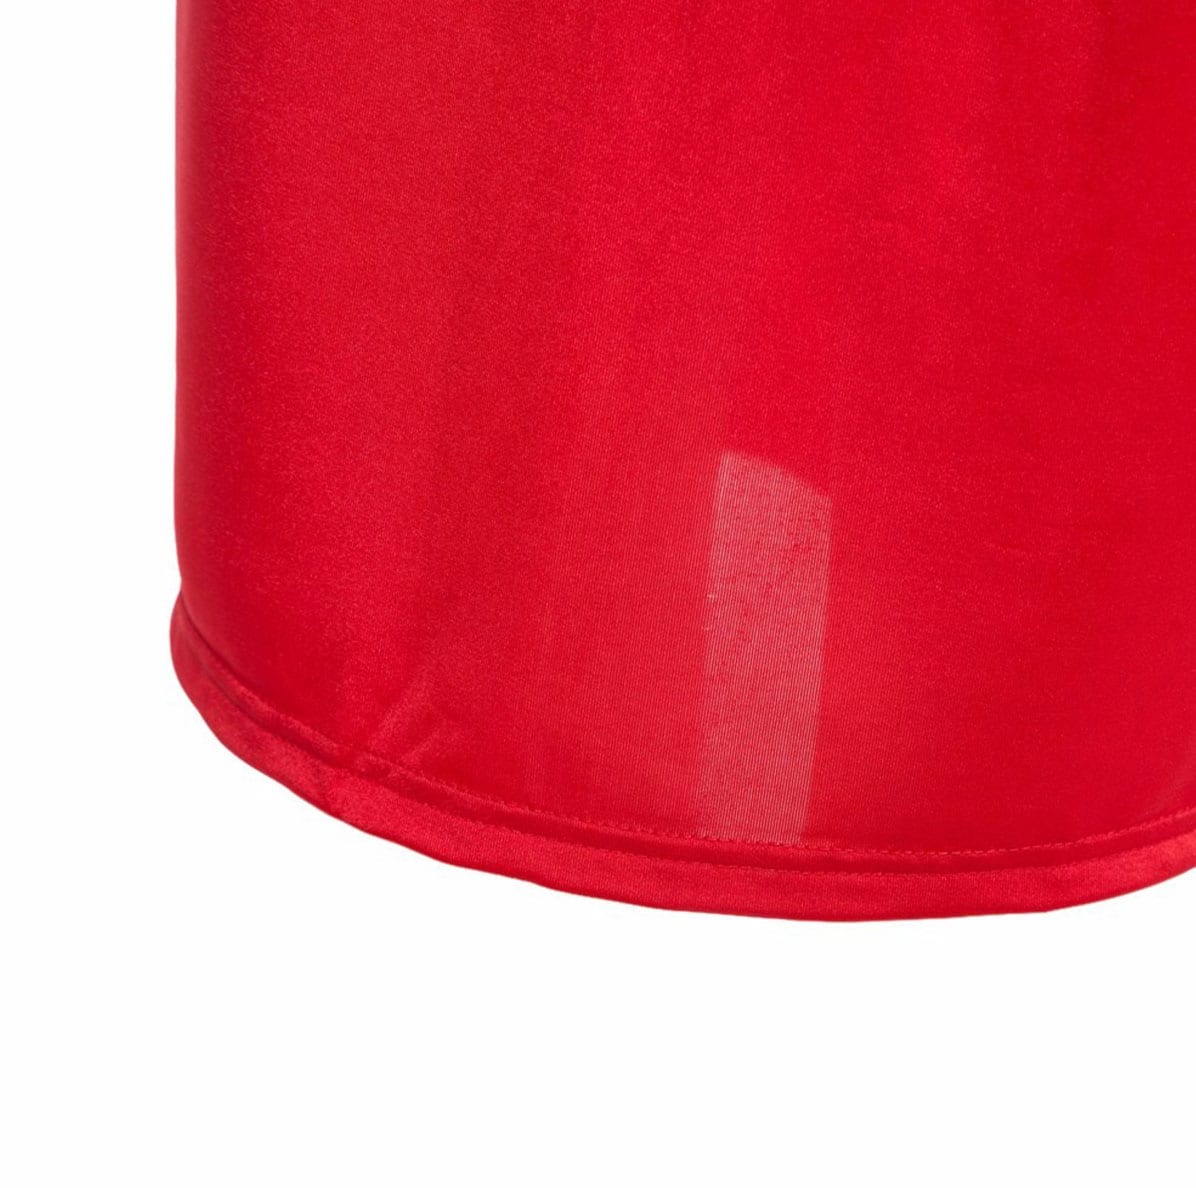 M0188 red9 Short Sleeve Dresses maureens.com boutique